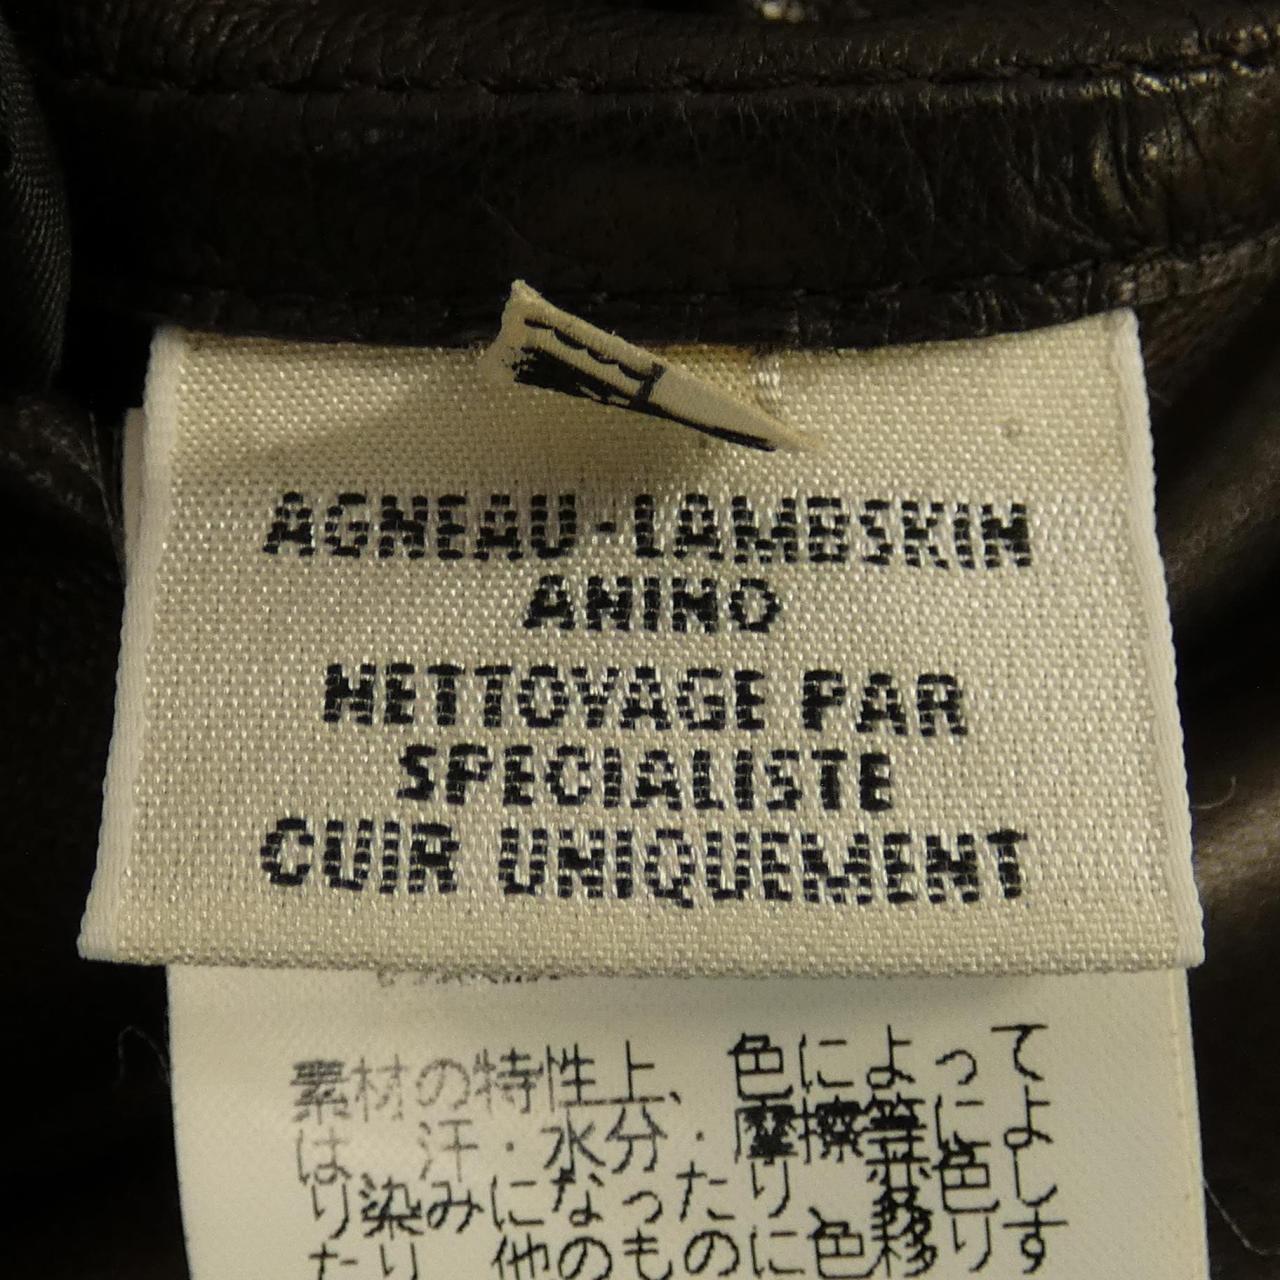 [vintage] HERMES Leather Skirt